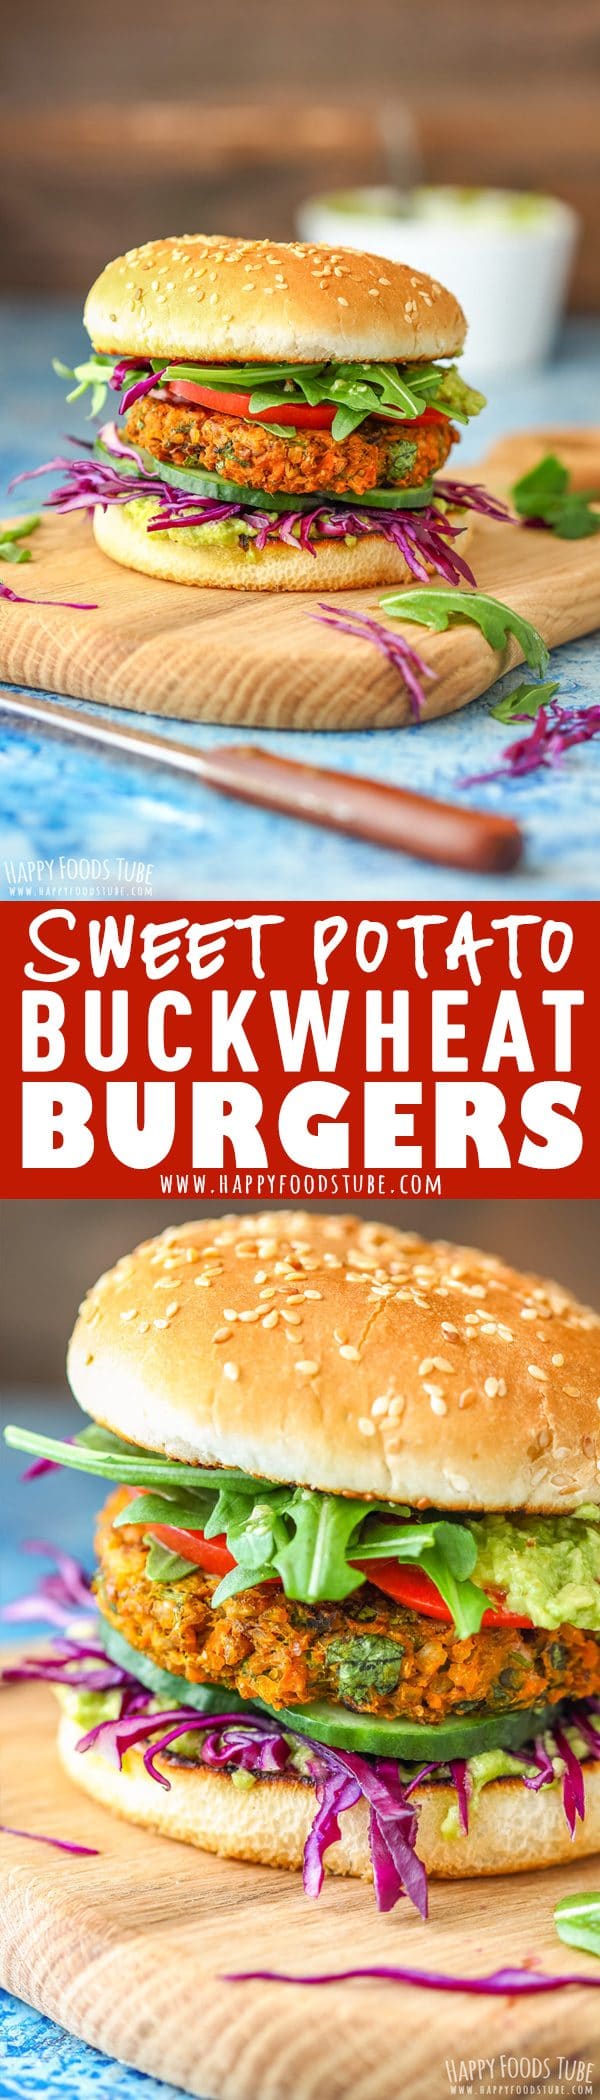 Sweet Potato Buckwheat Burgers Picture Collage